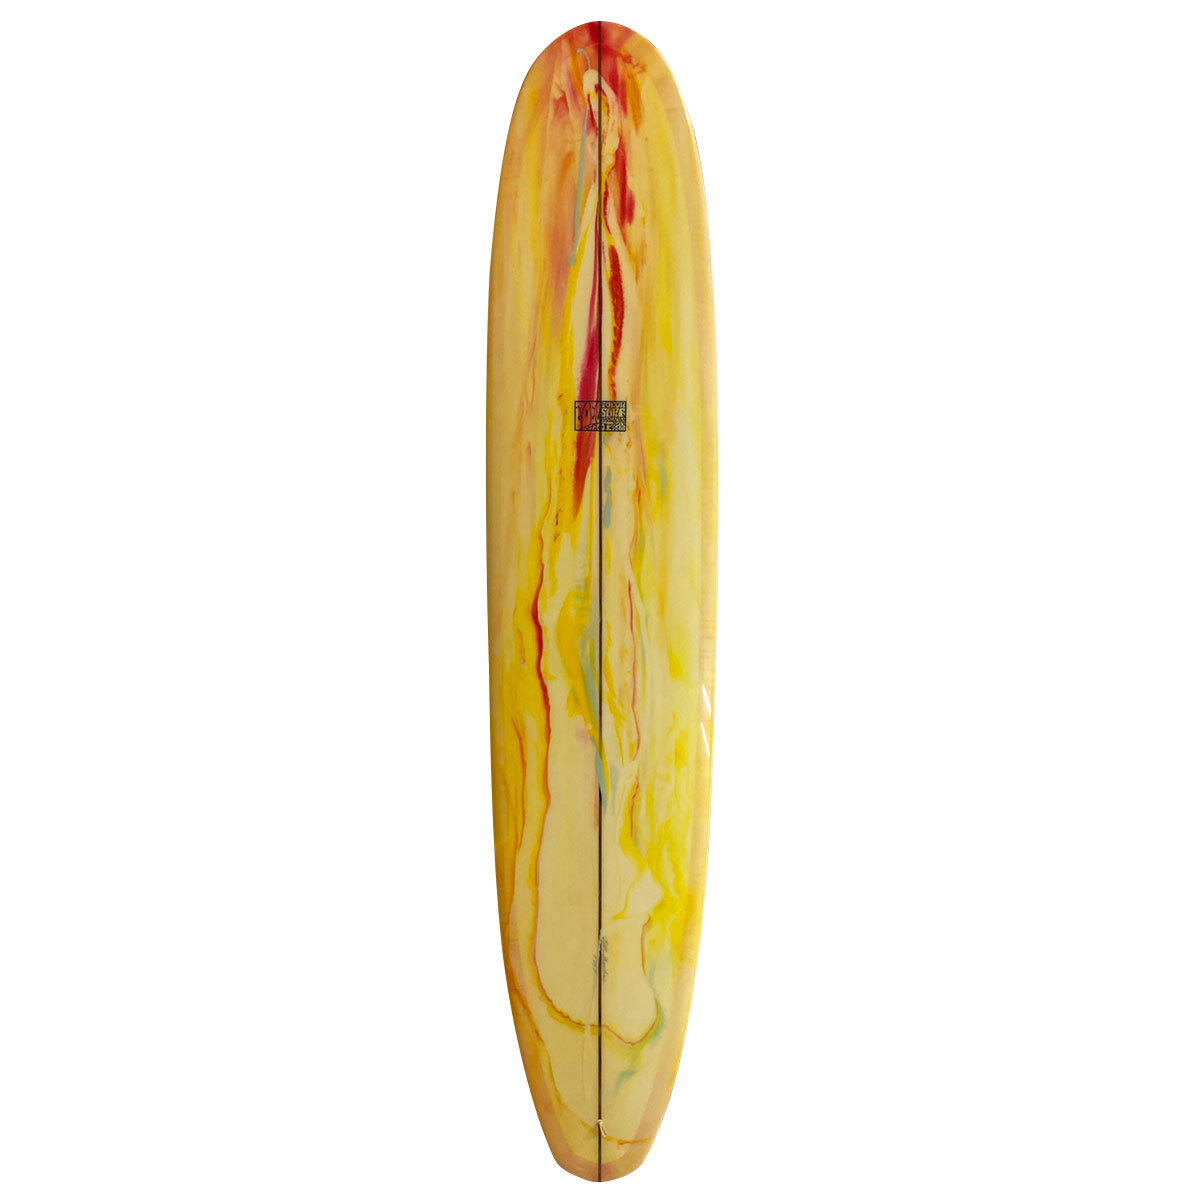 JOEL TUDOR SURFBOARD / JOEL TUDOR / DIAMOND TAIL 9`0 Shaped by BILL SHROSBEE